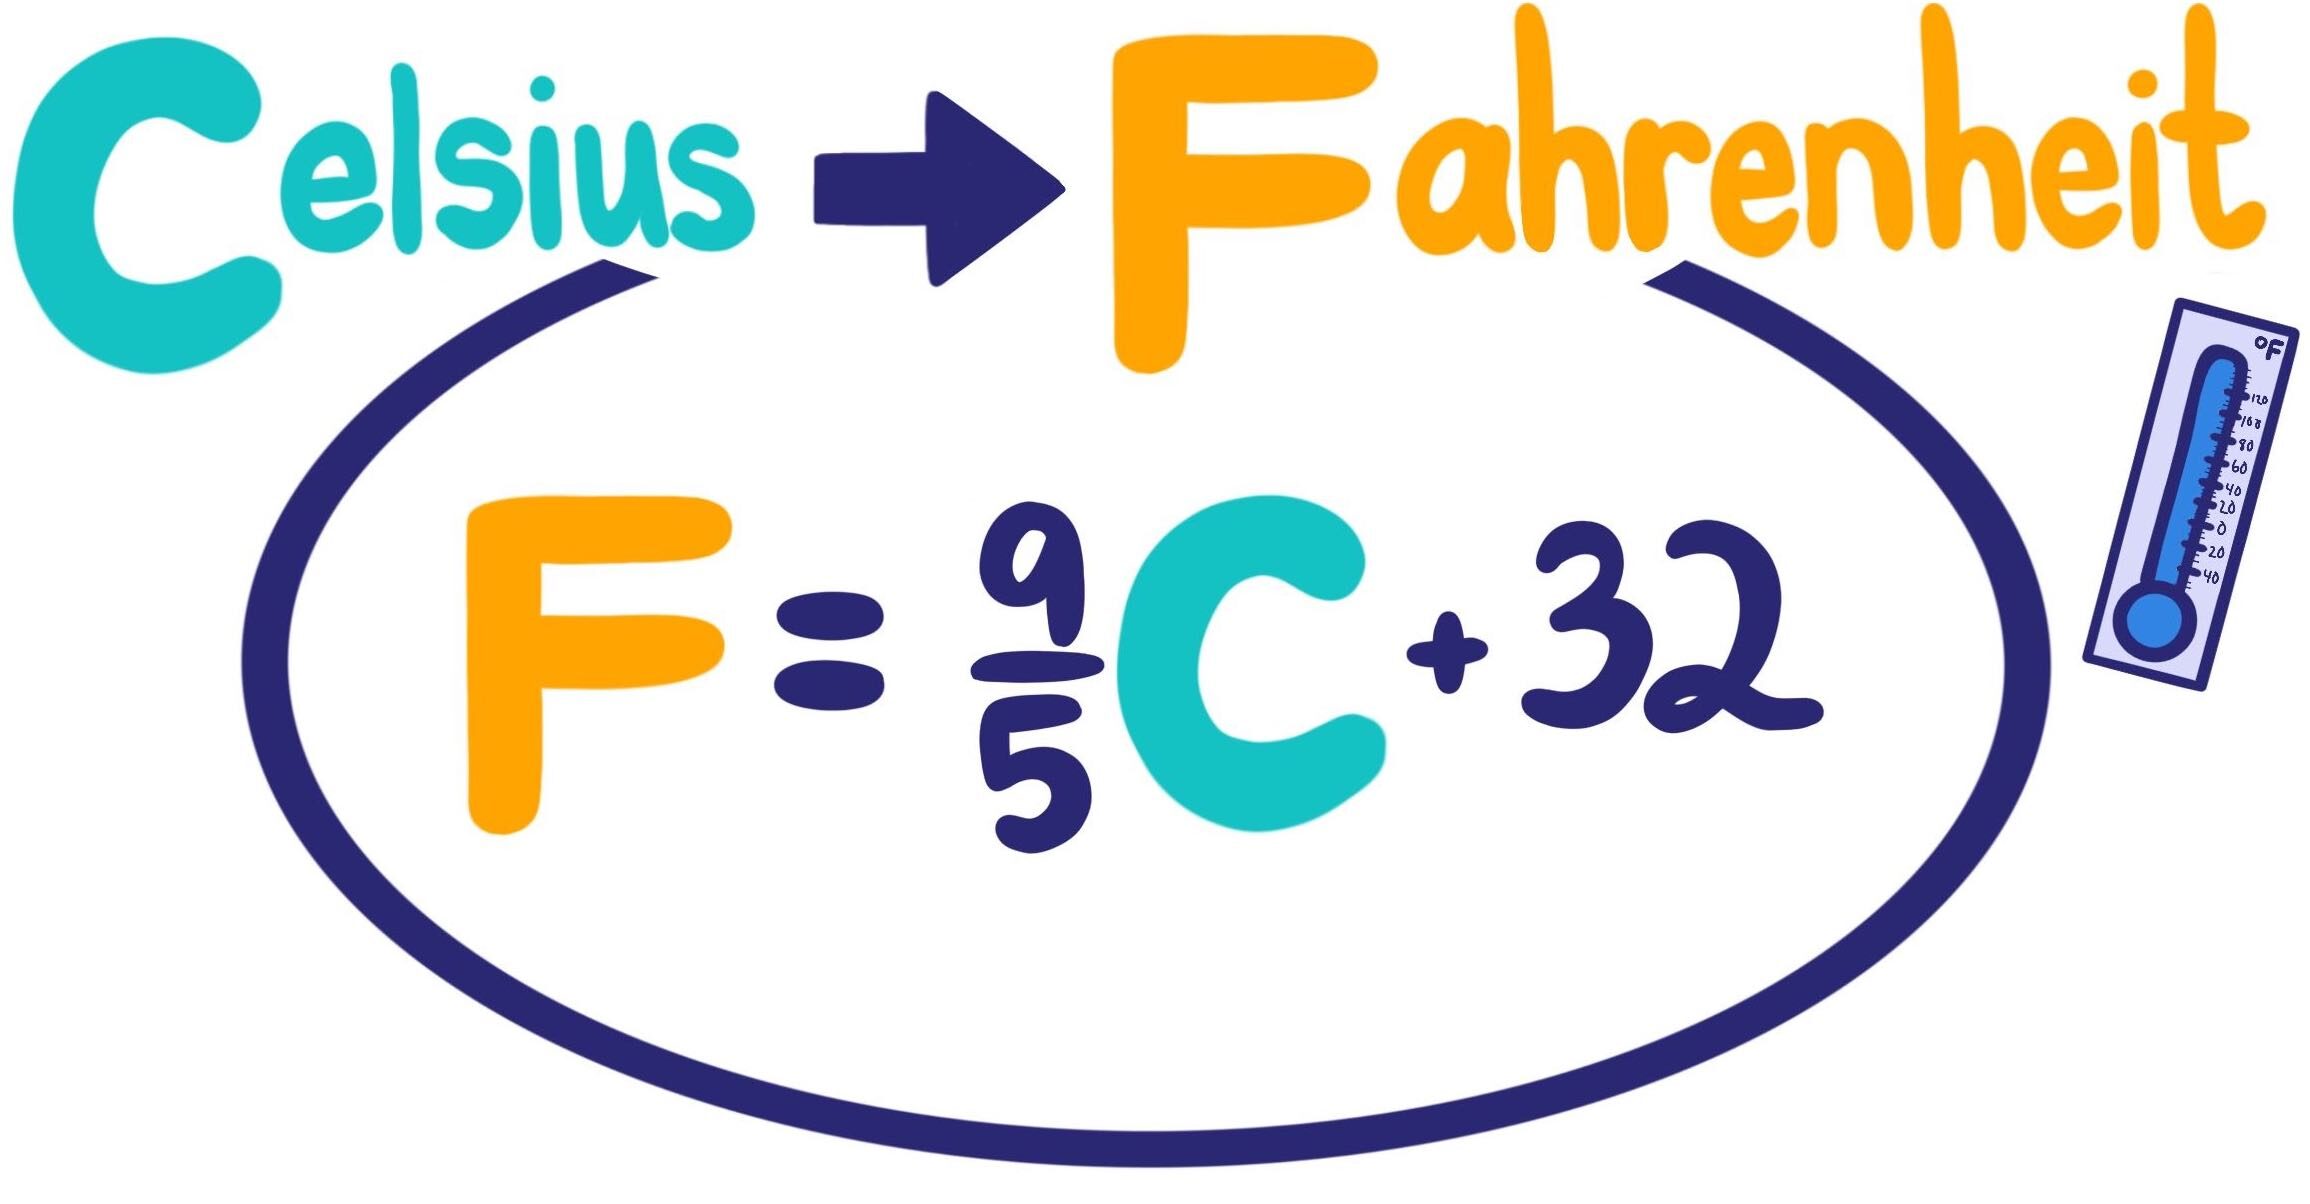 The Formula for Fahrenheit to Celsius Conversion